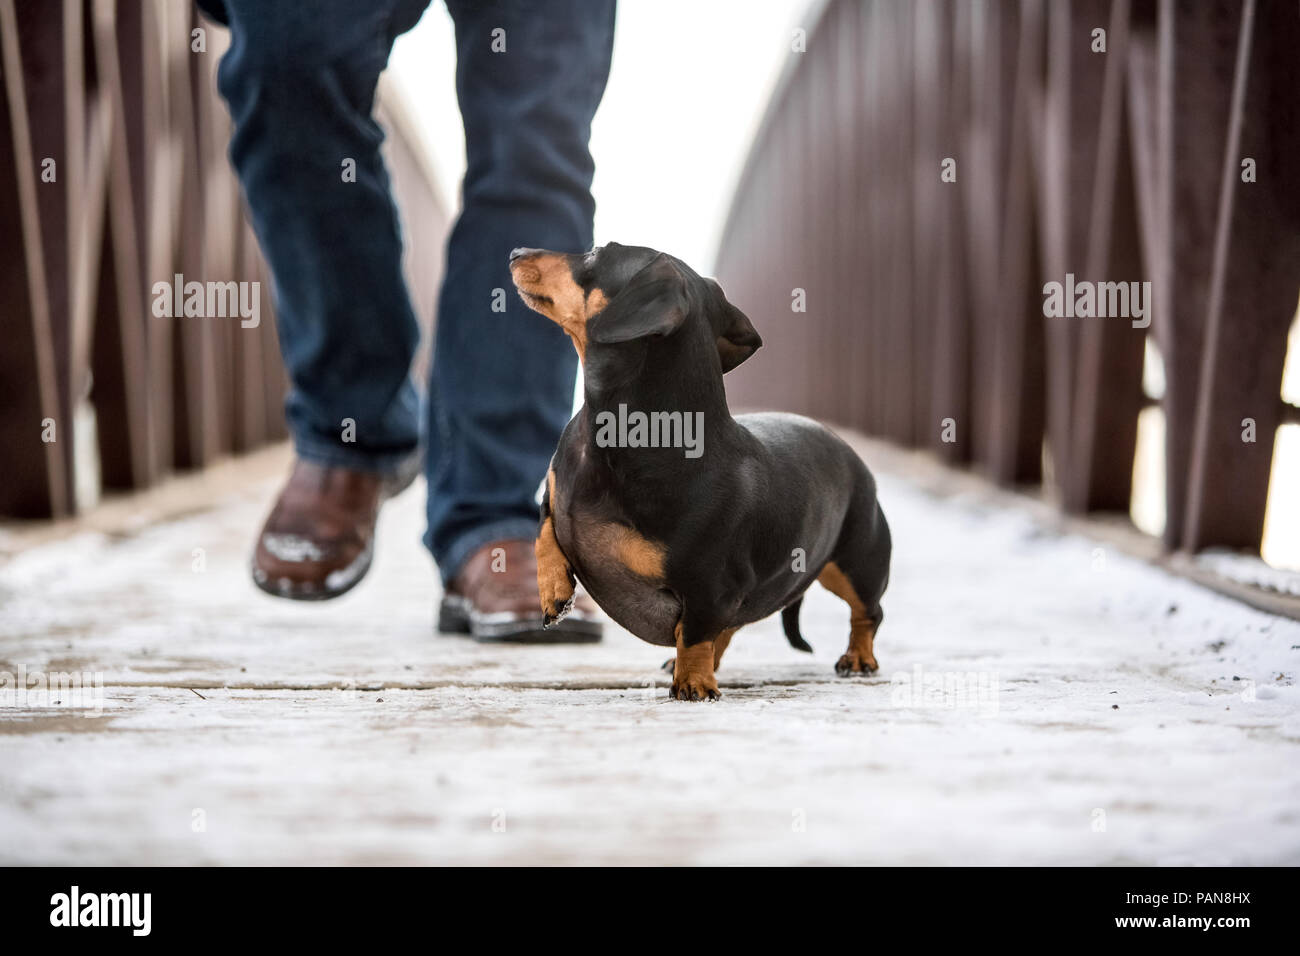 Dachshund walking next to man on bridge with no collar Stock Photo